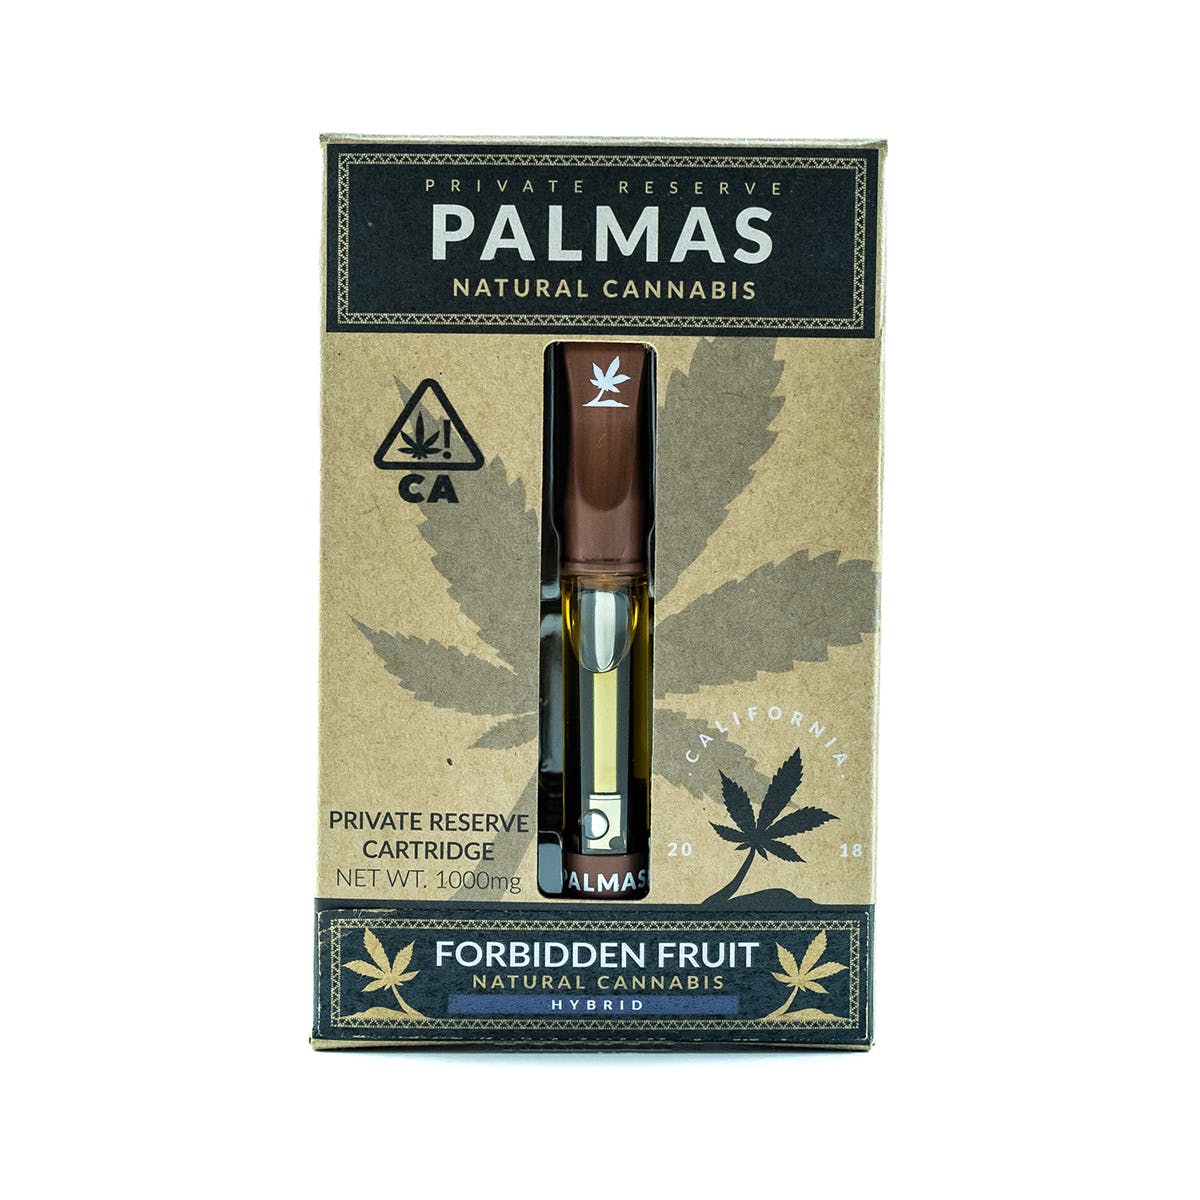 marijuana-dispensaries-white-castle-in-wilmington-palmas-private-reserve-cartridge-forbidden-fruit